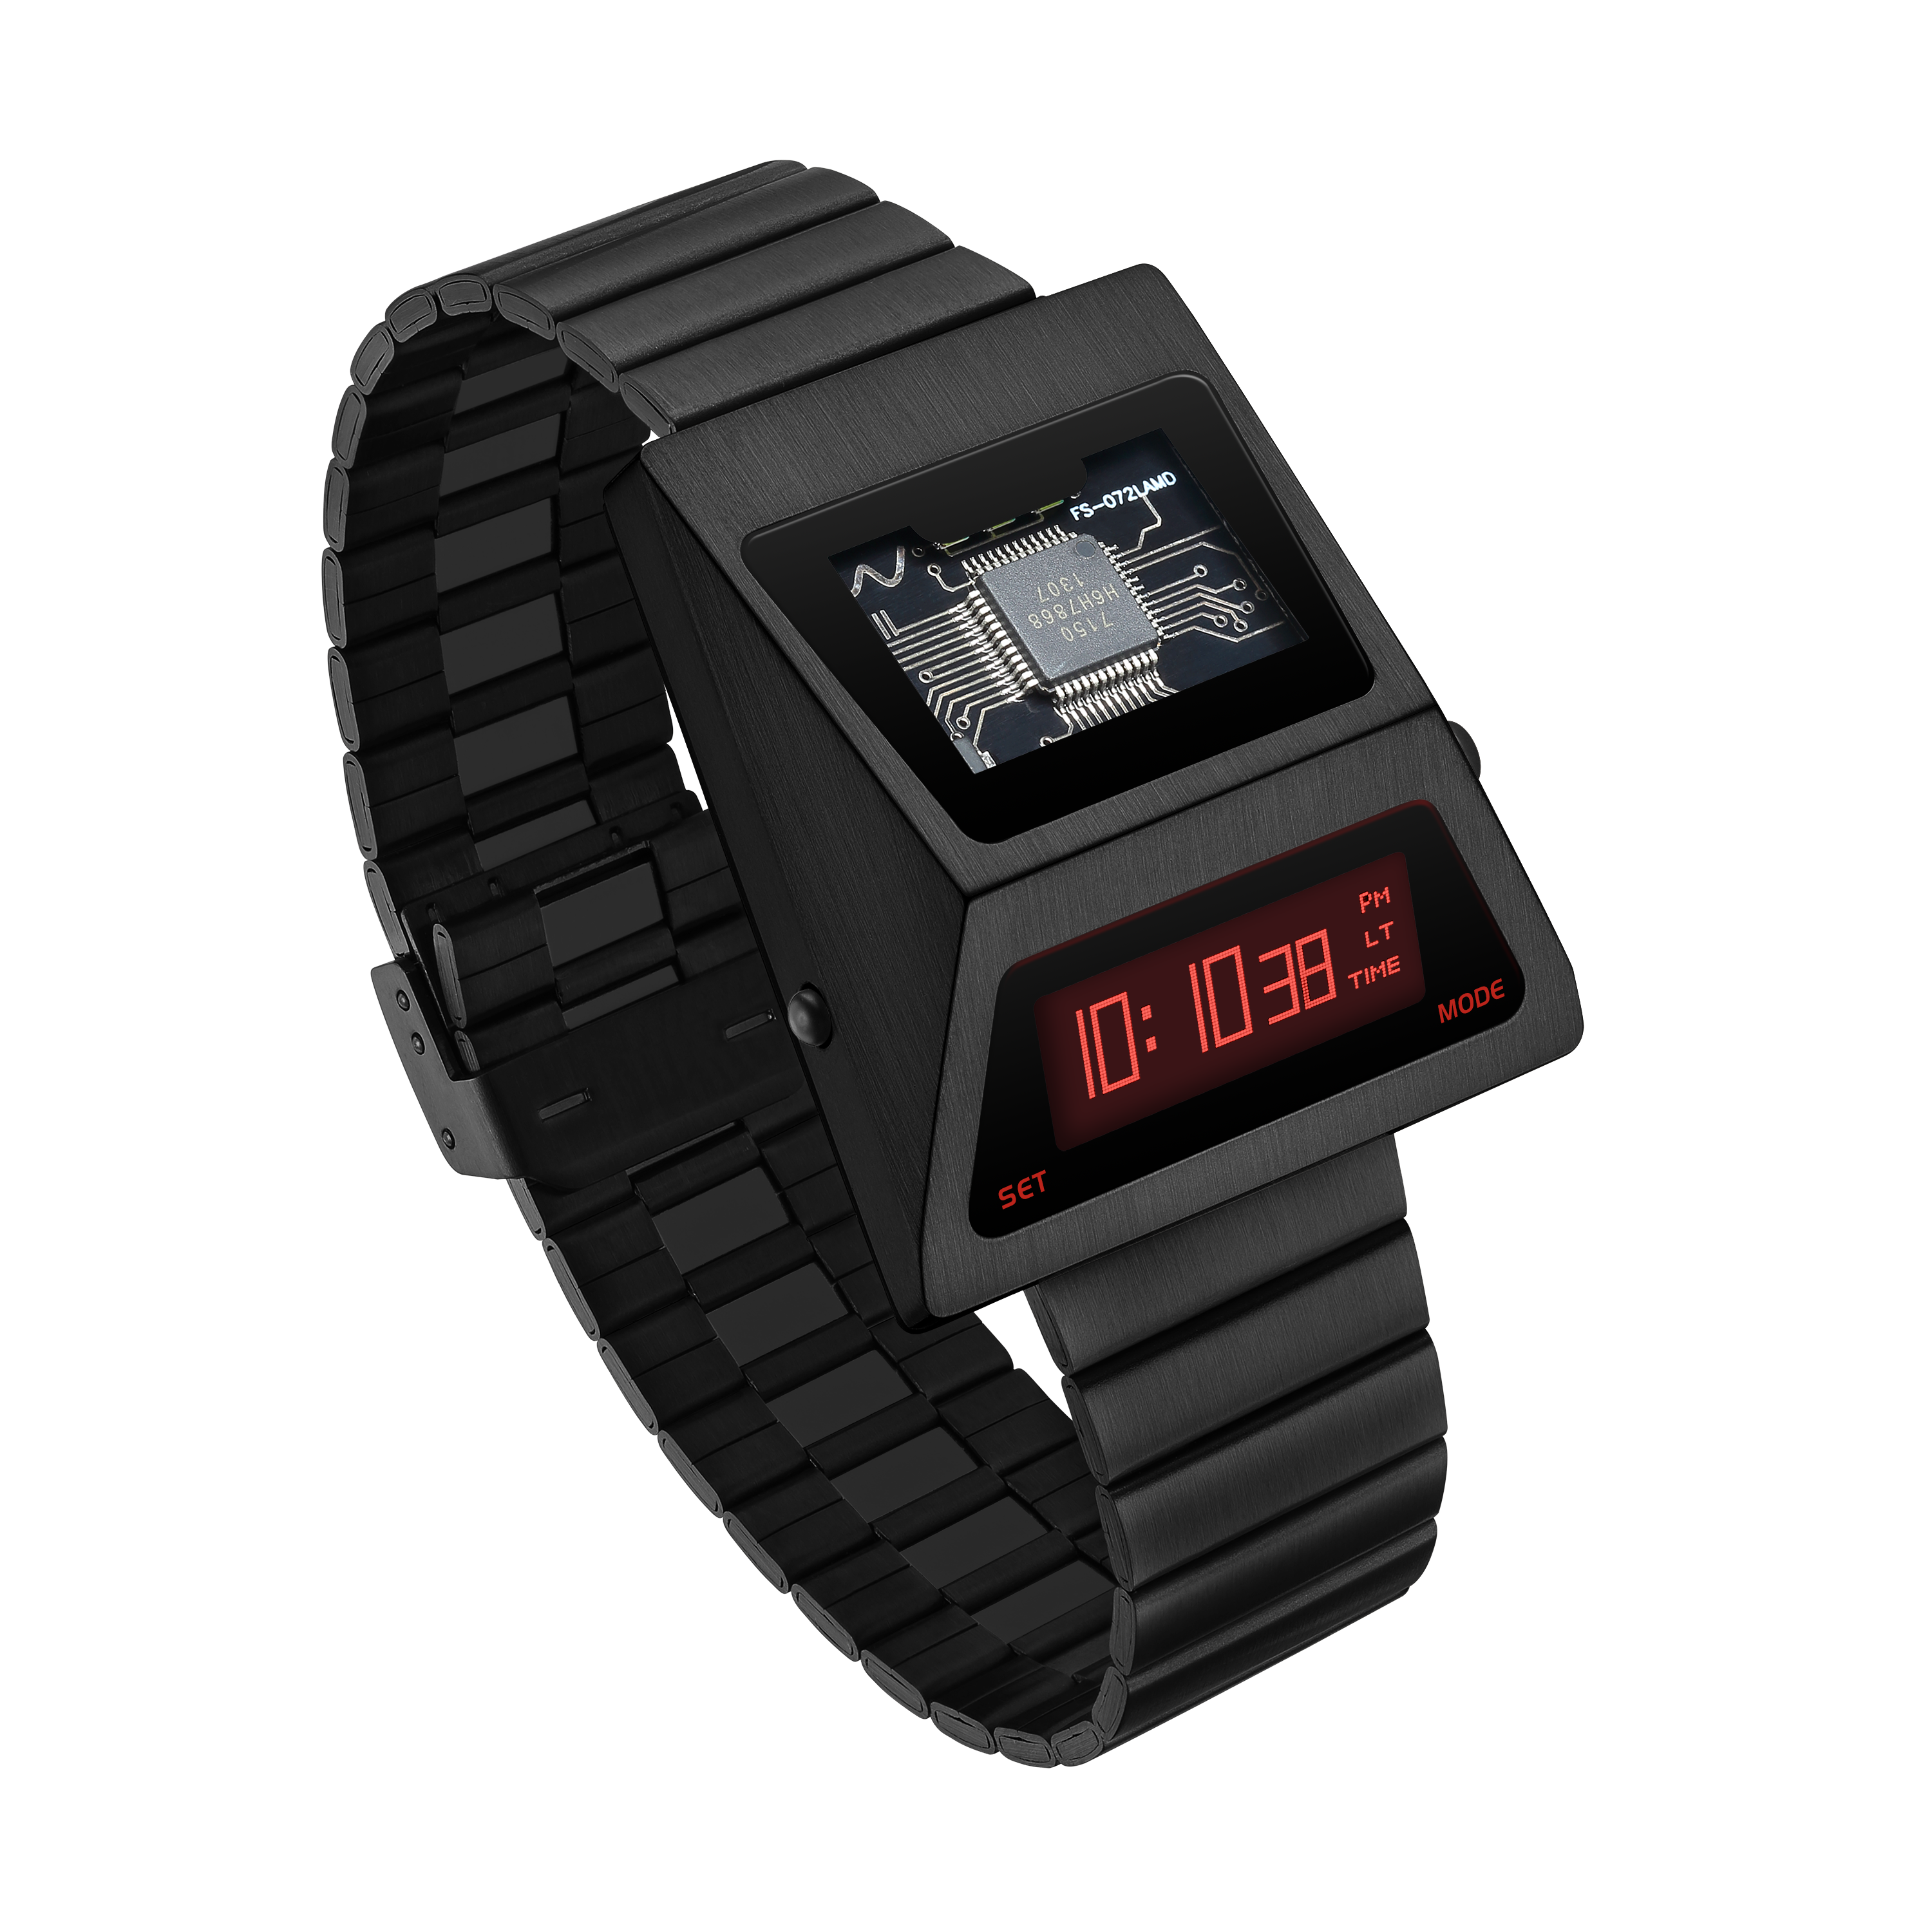 benlydesign-cyber-watch-s3000black-R-detail view